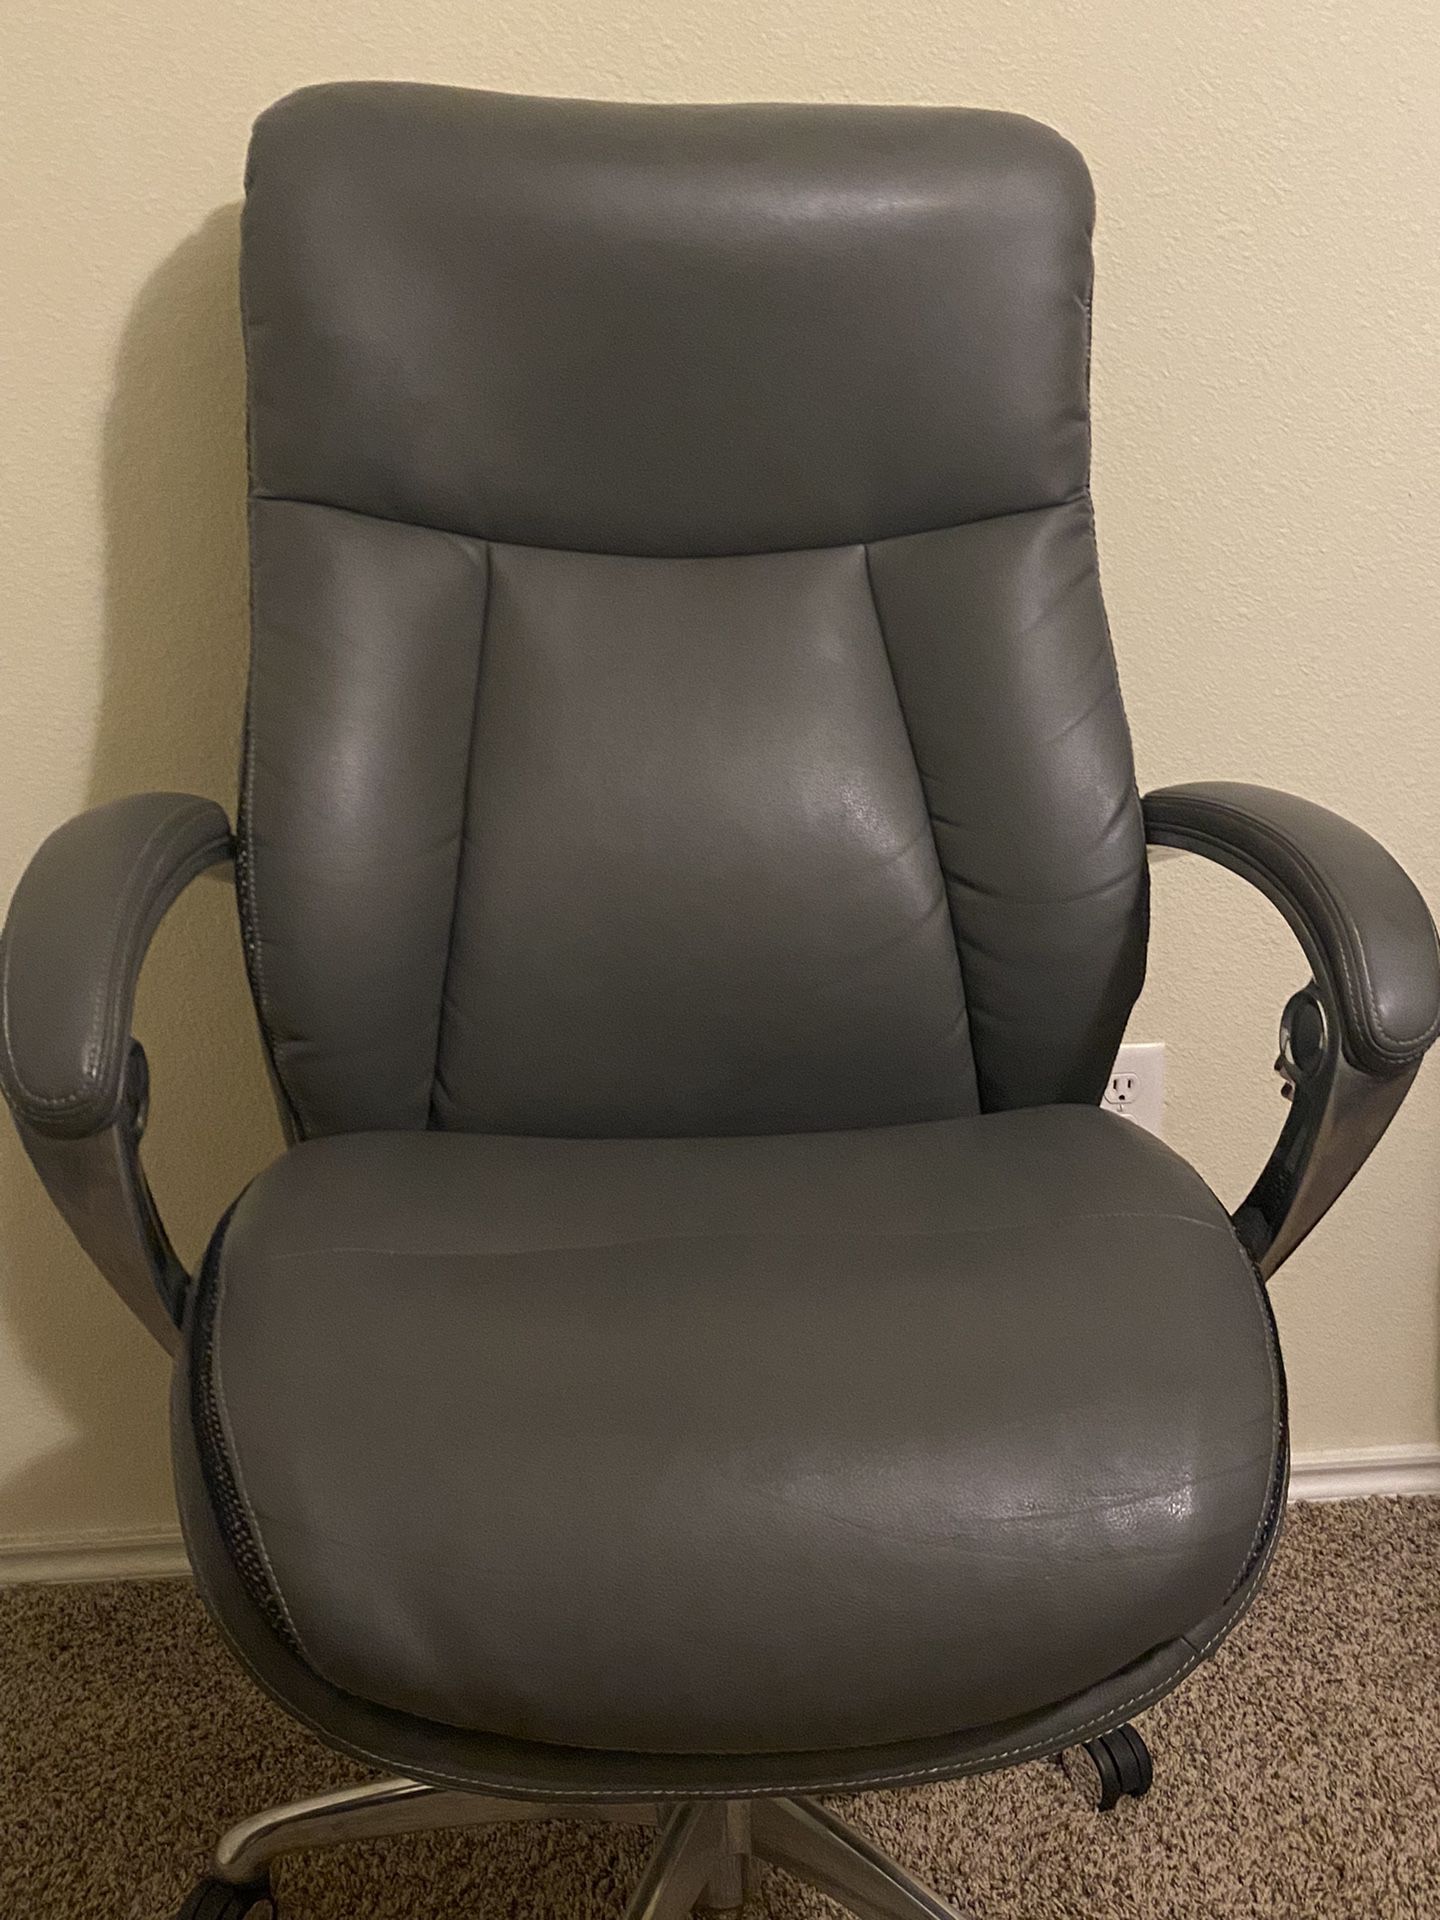 iComfort Workpro Office/Desk Chair